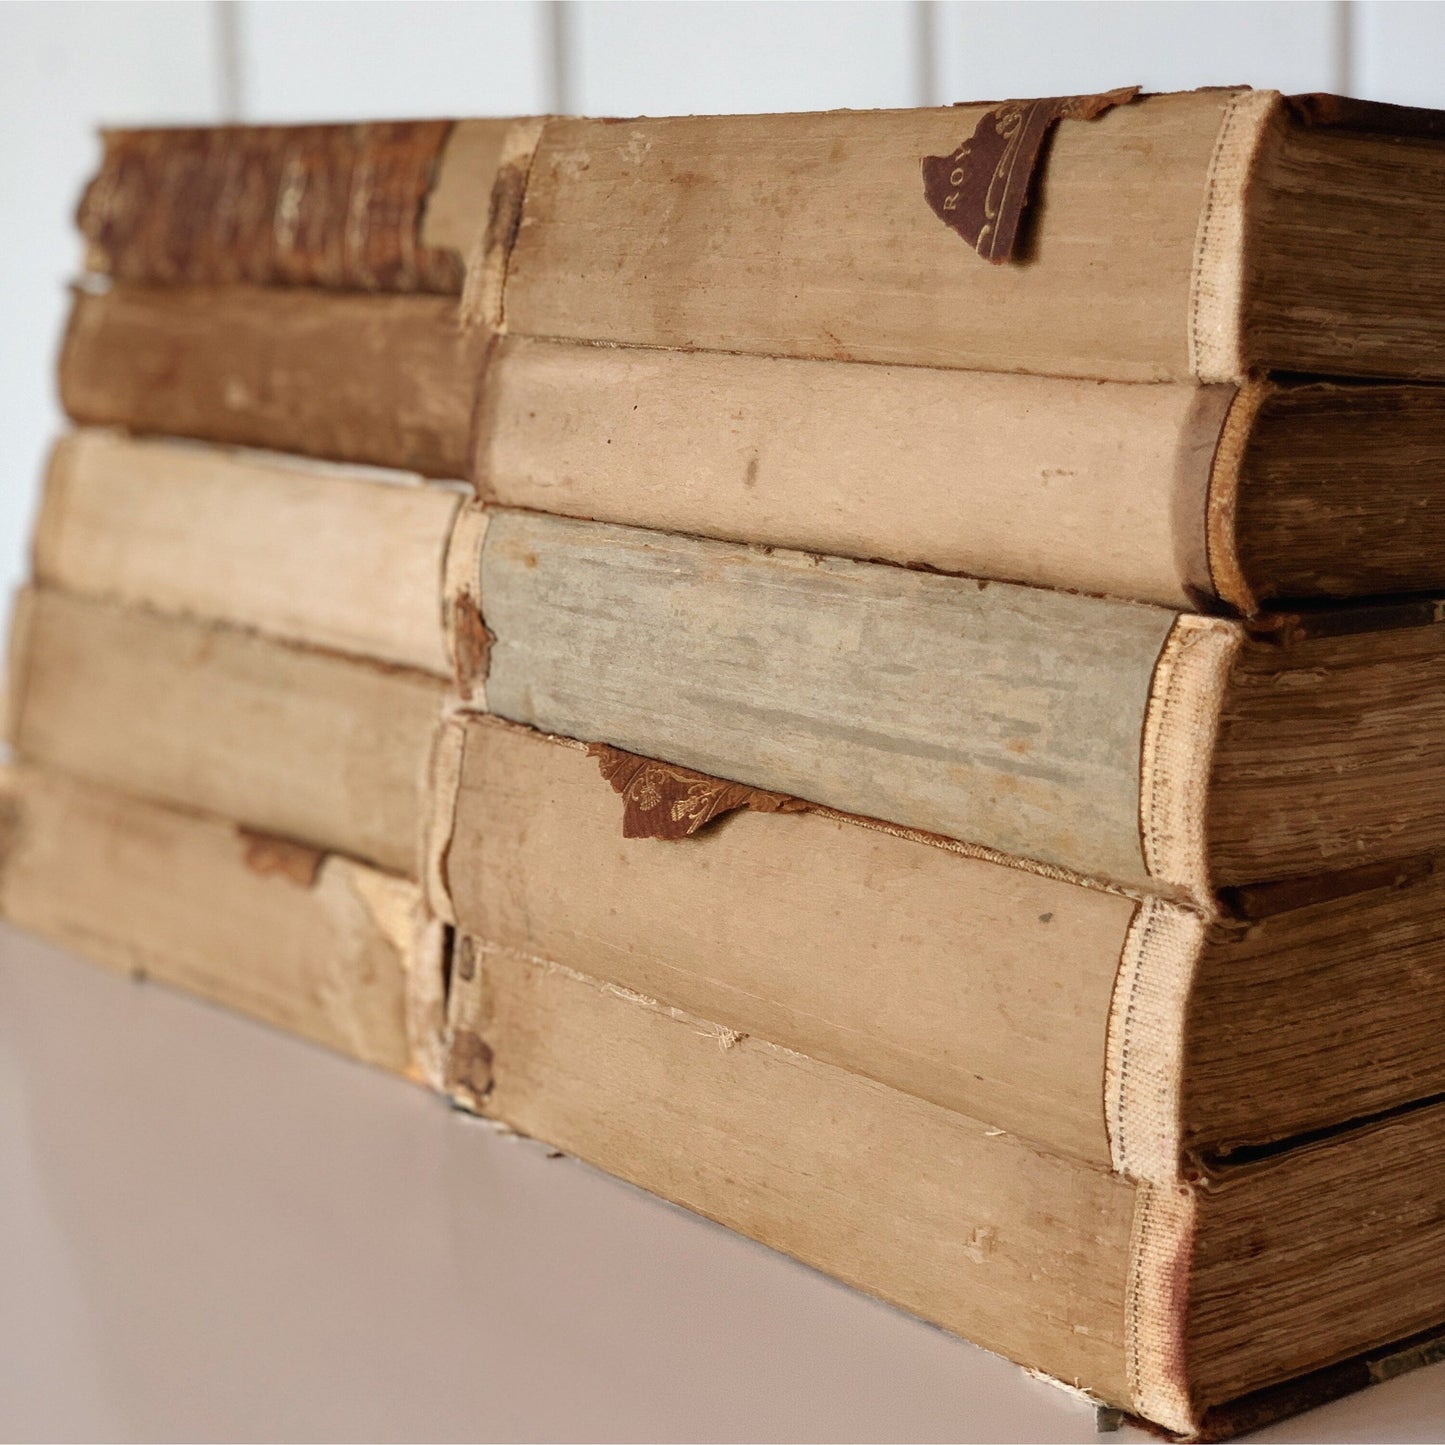 Unbound and Distressed Books for Decor - Antique Book Bundle Farmhouse Decor